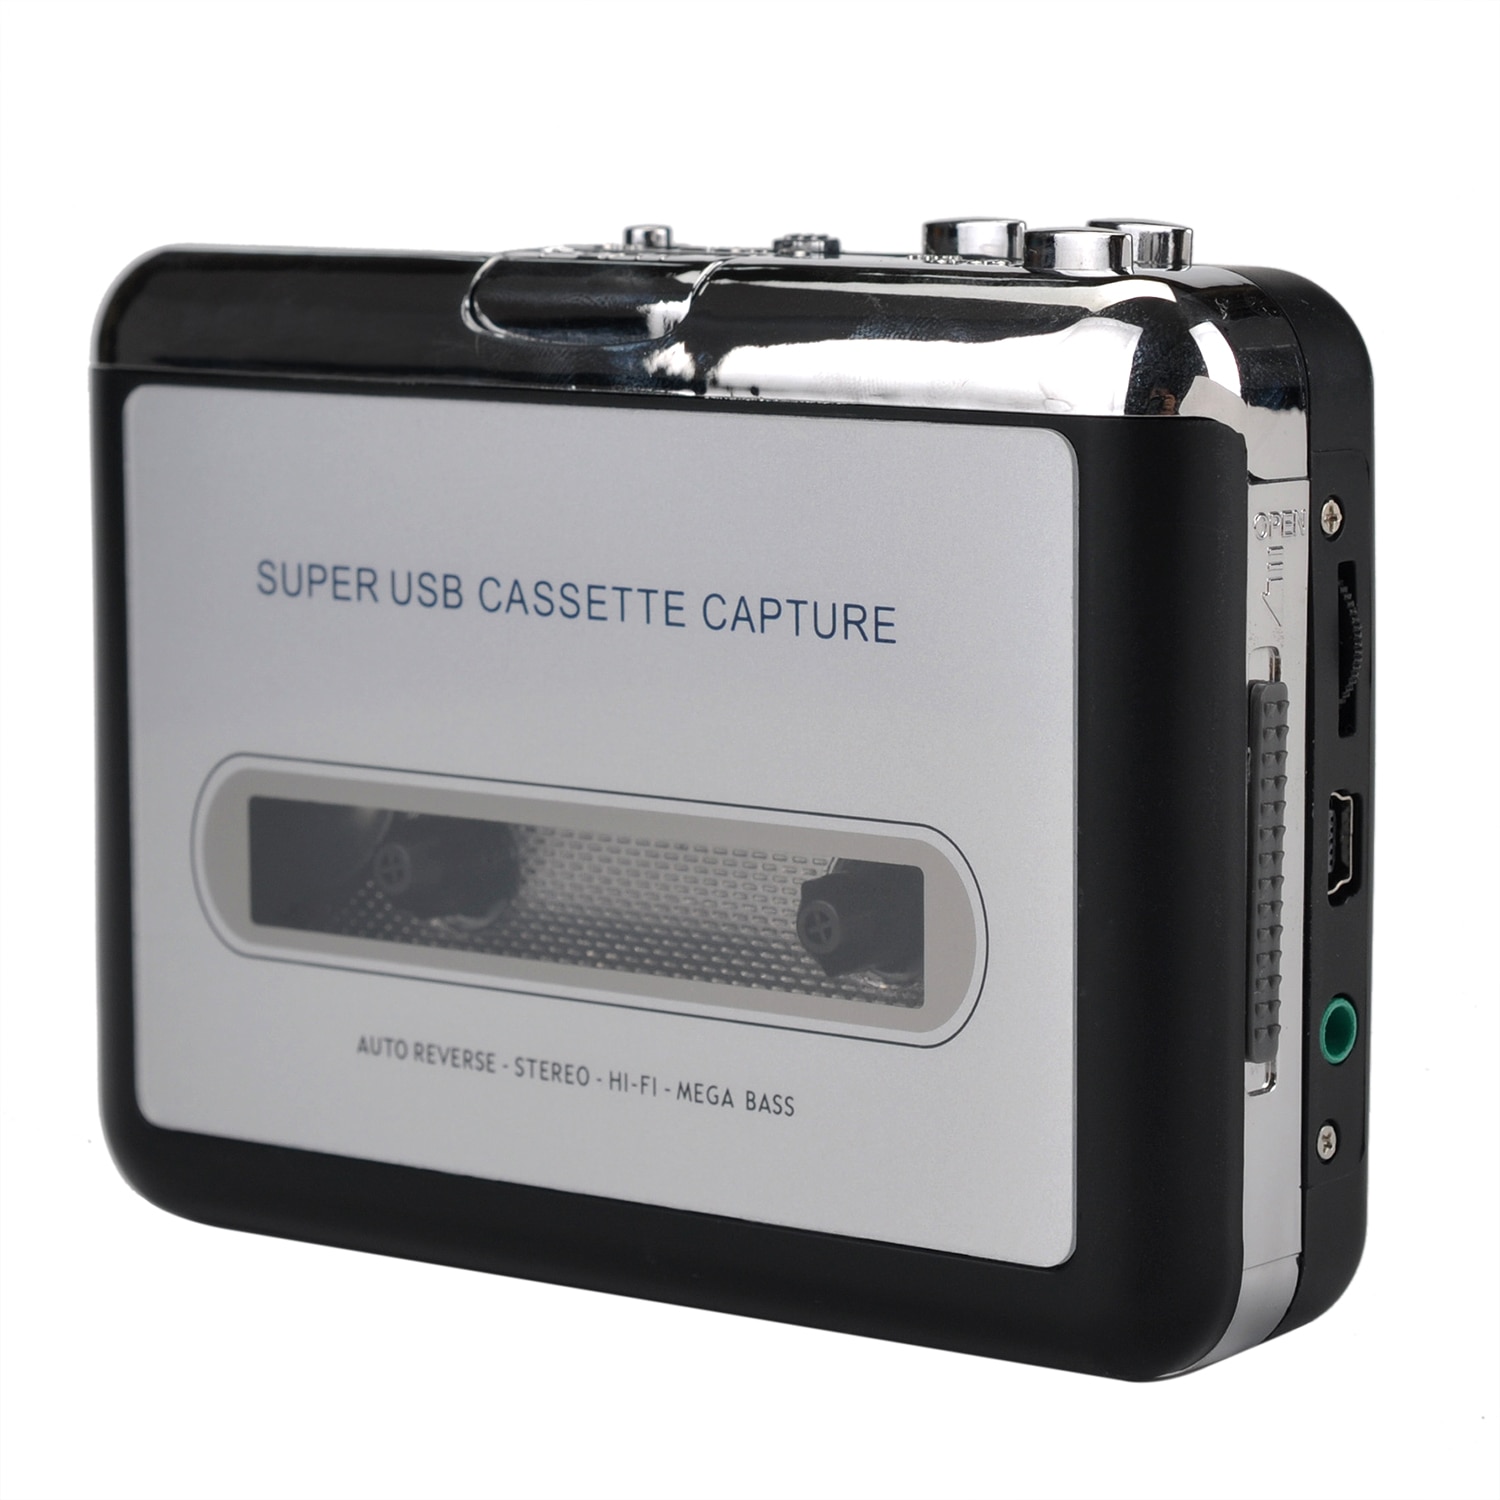 Ezcap218 Super Usb Cassette Capture Tape Naar MP3 Cassette Converter Speler